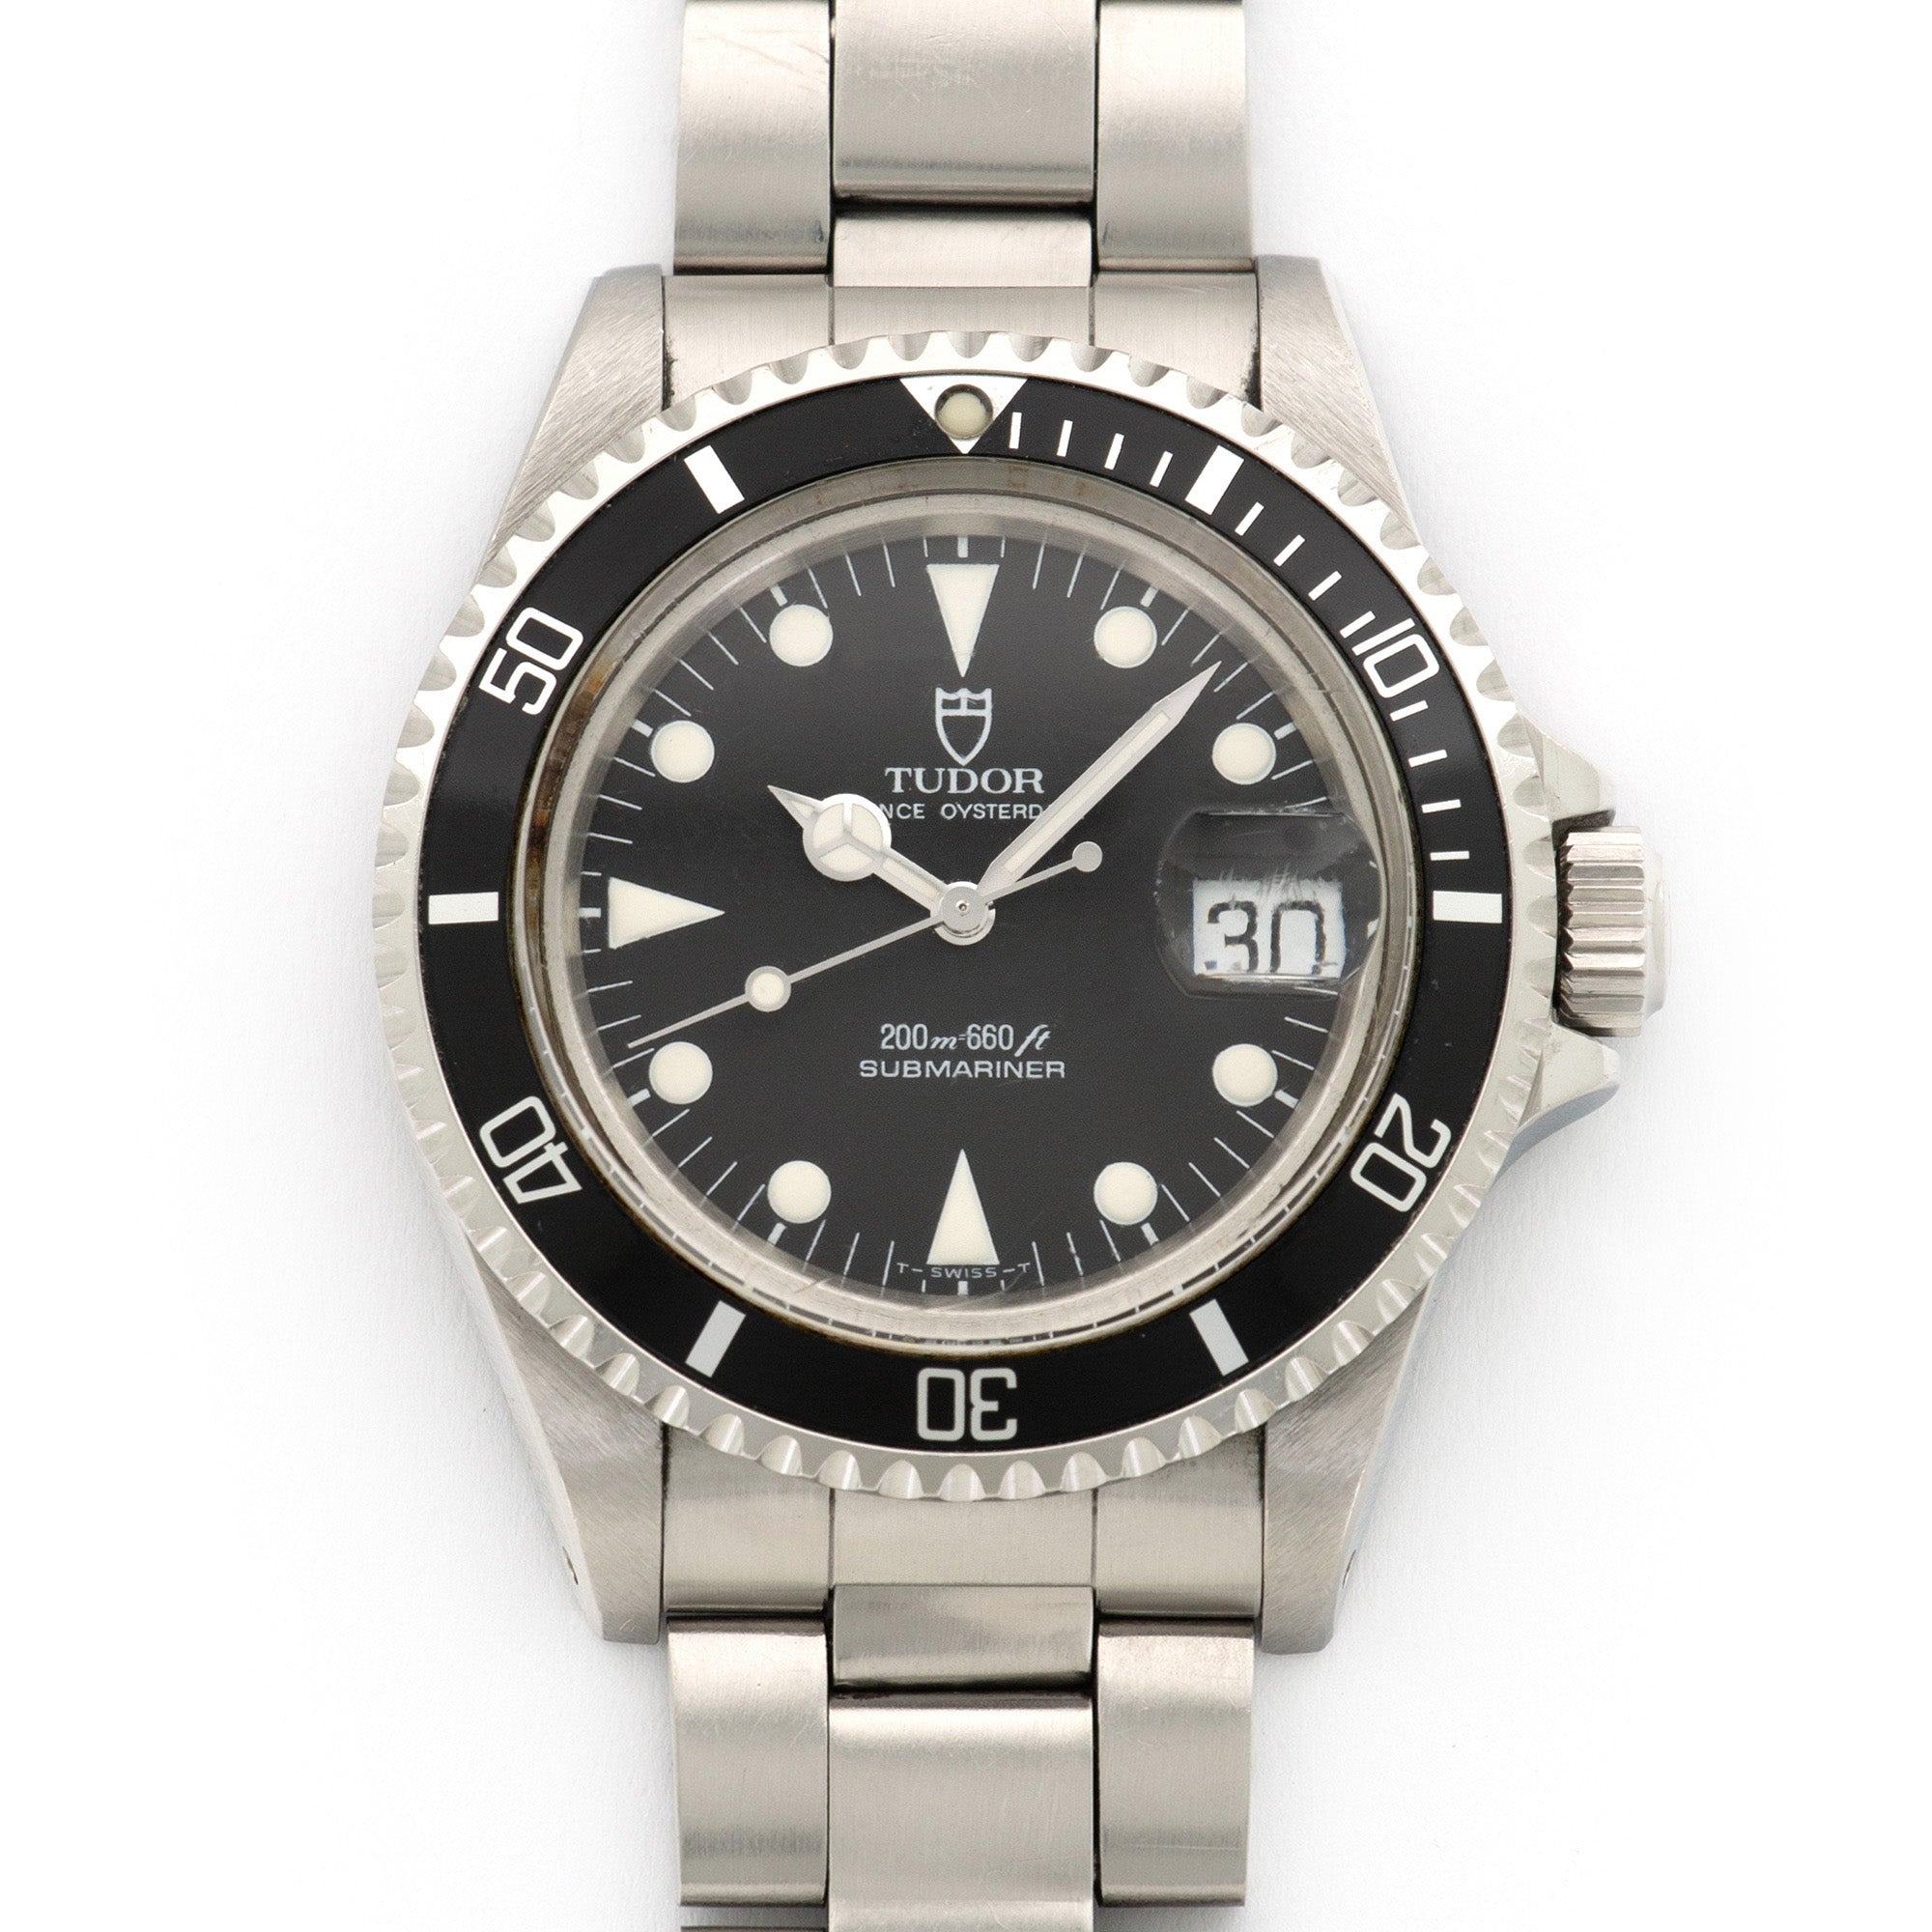 Tudor - Tudor Submariner Watch Ref. 79090 with Original Warranty Paper - The Keystone Watches